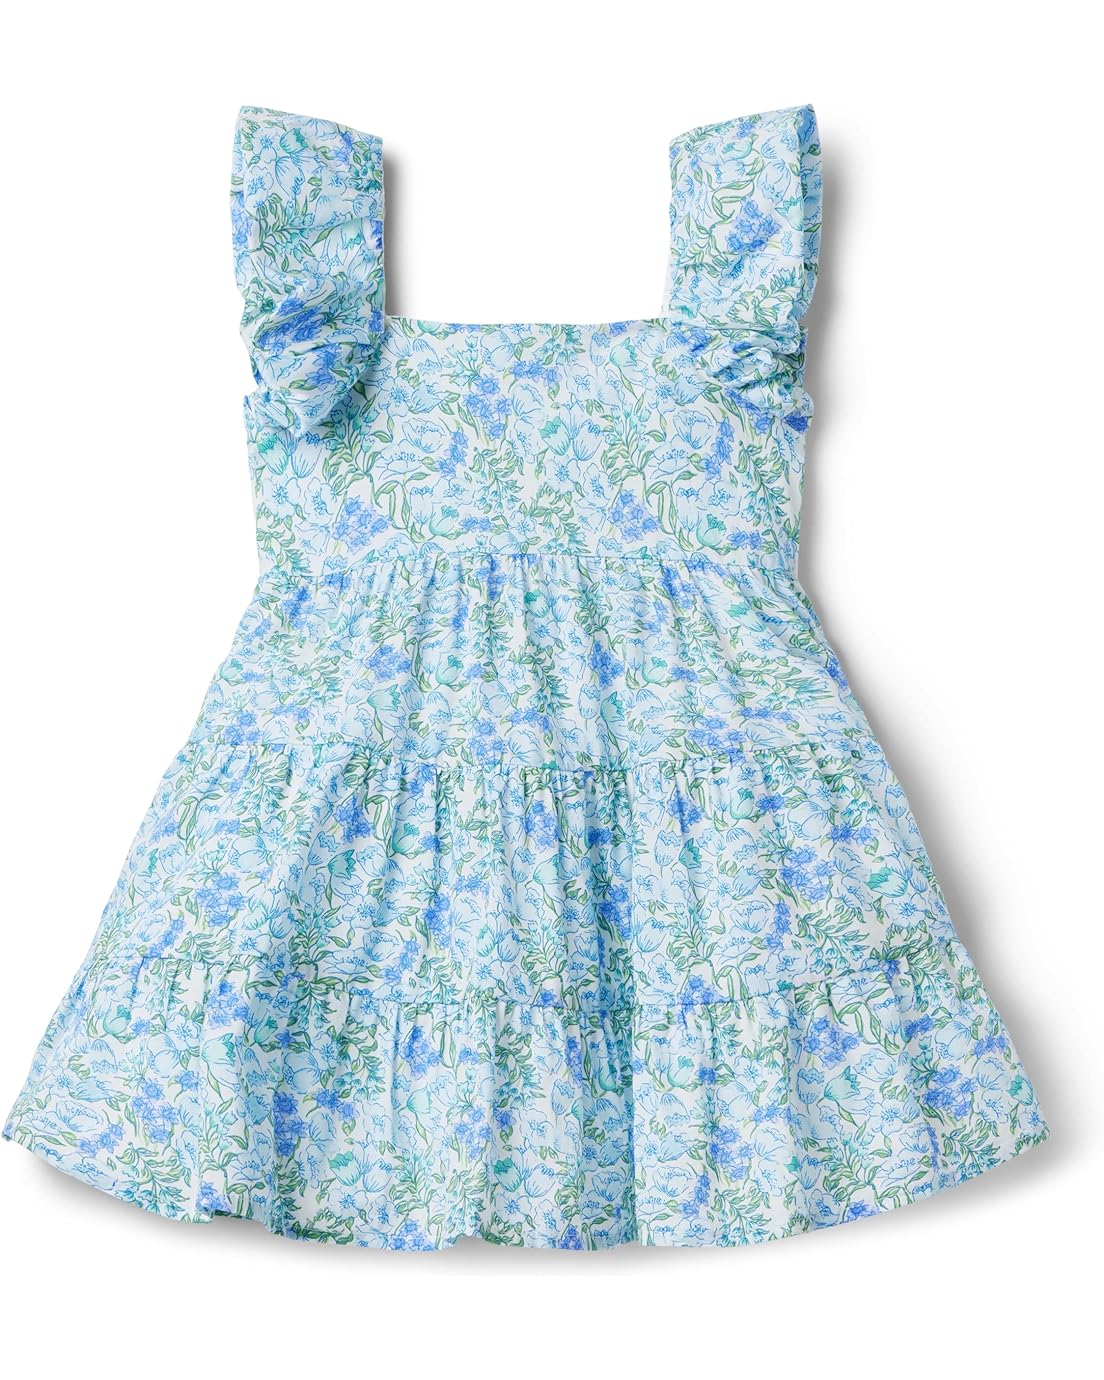 Janie and Jack Ditsy Floral Dress (Toddler/Little Kids/Big Kids)